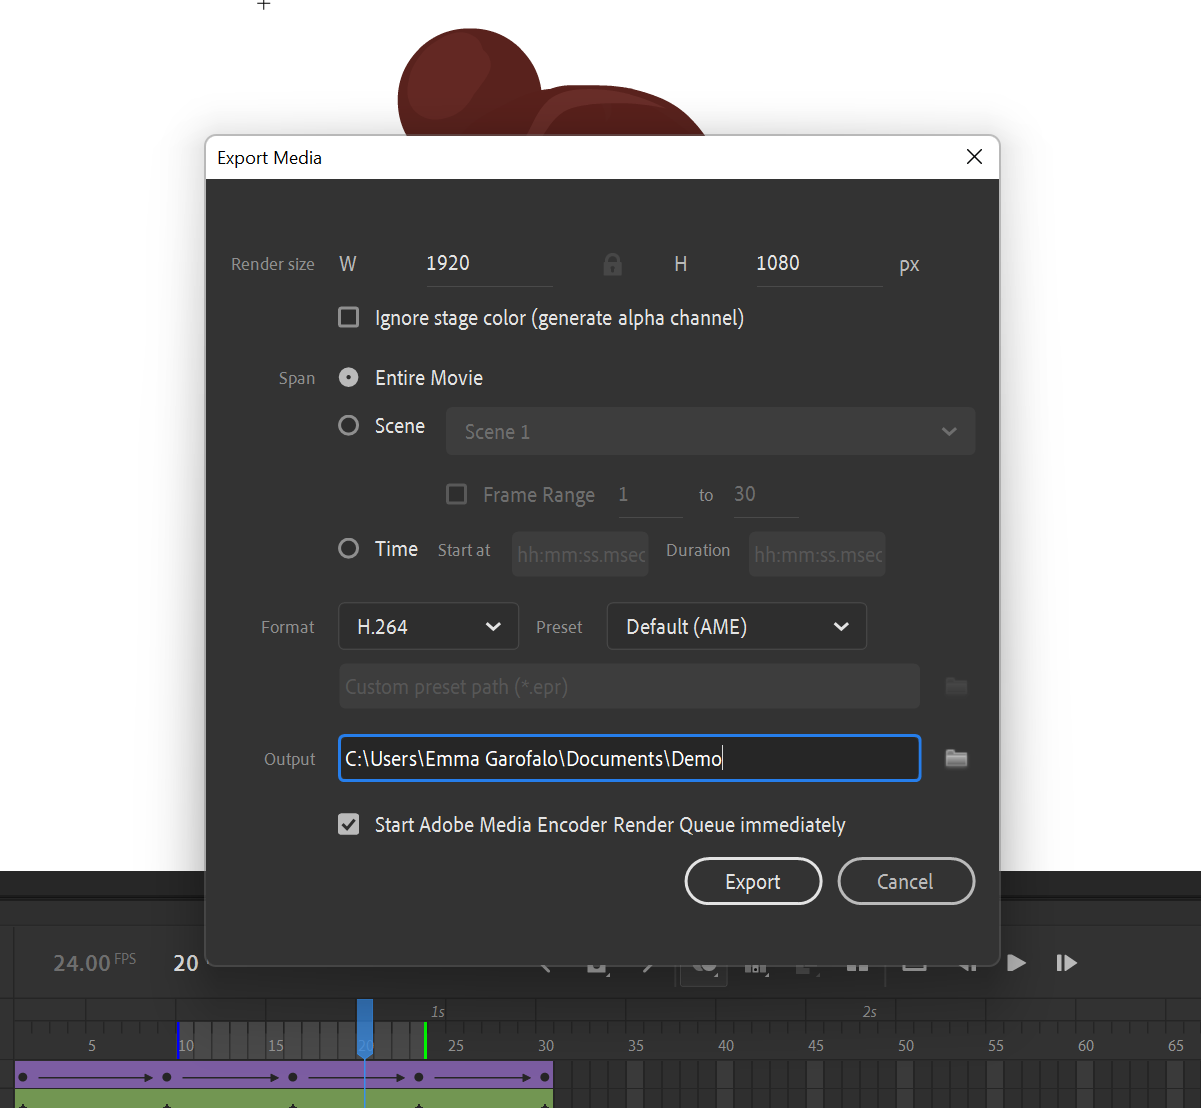 The export settings menu in Adobe Animate CC.